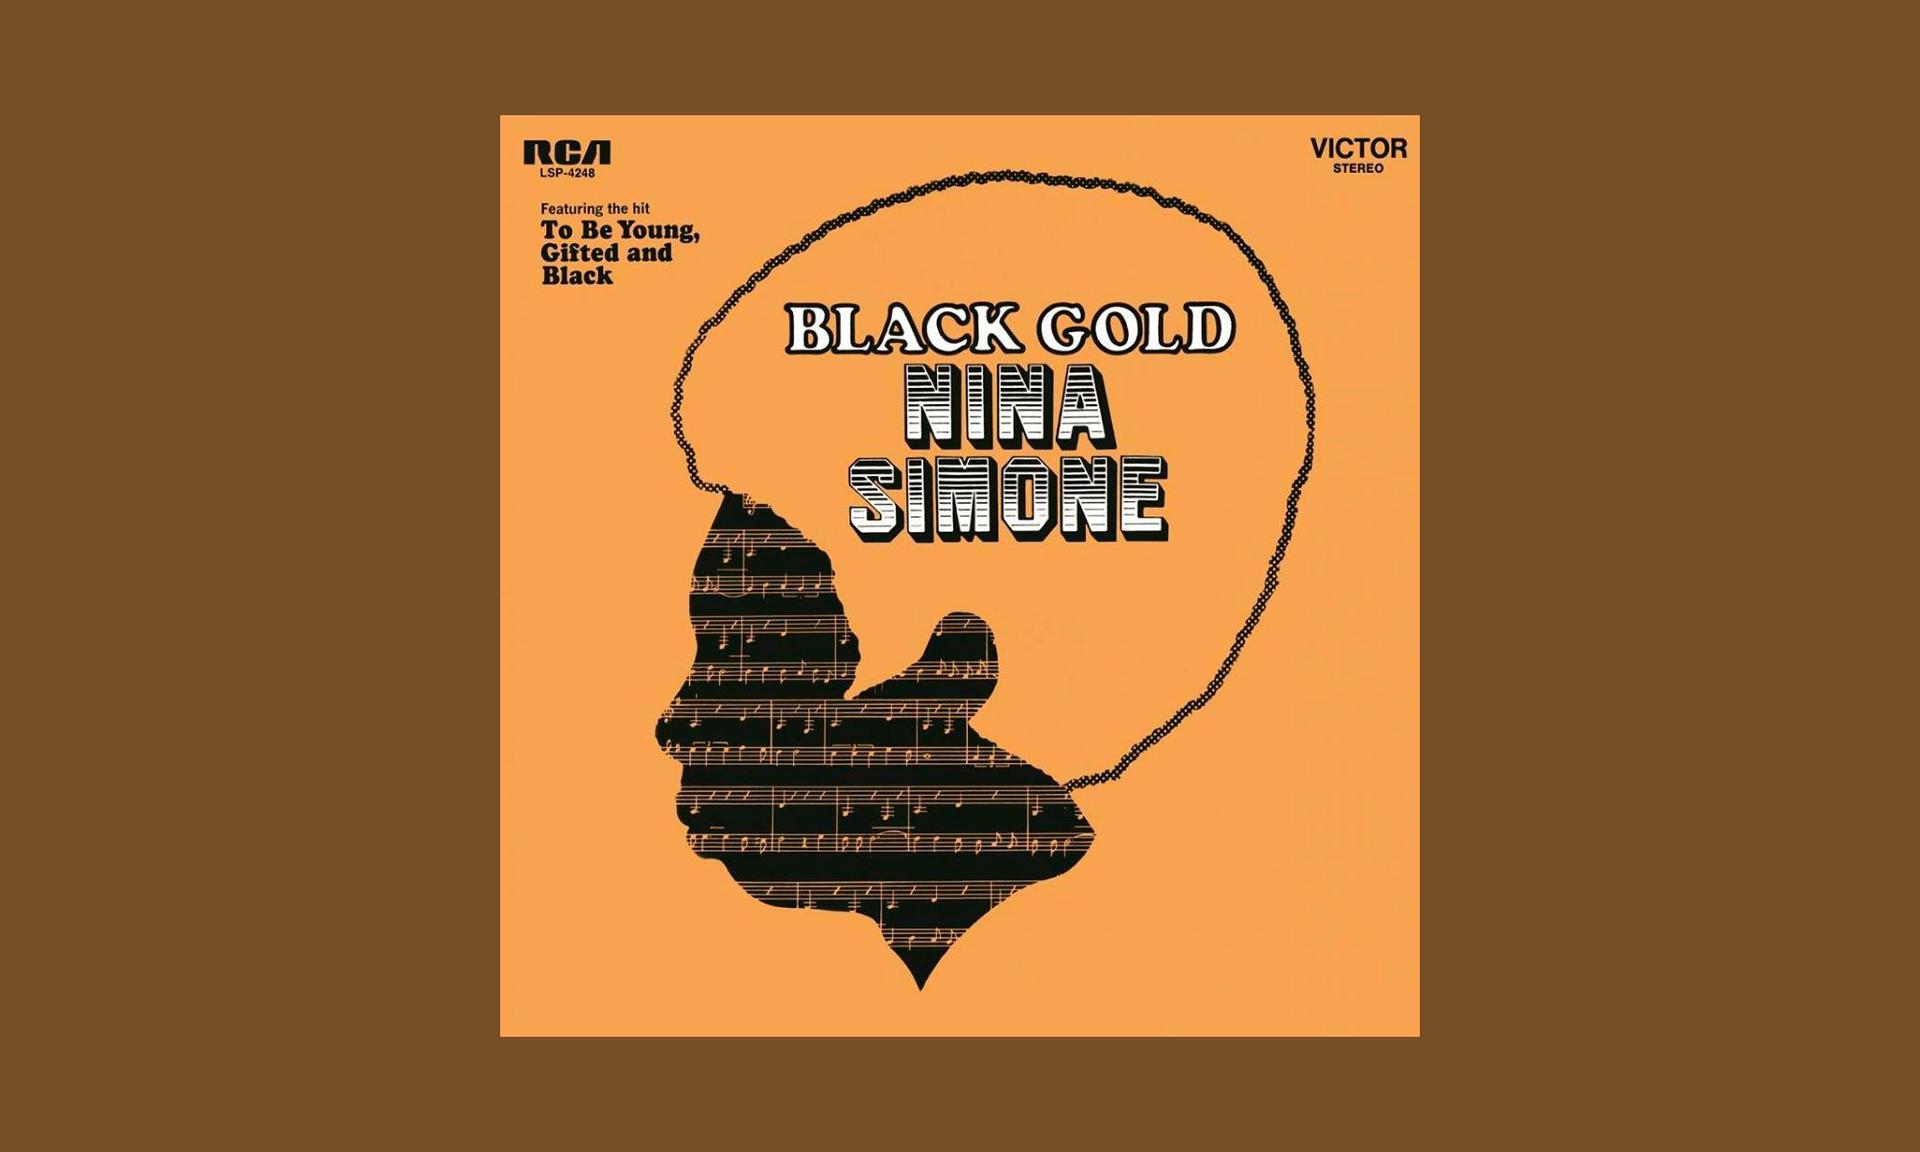 Nina Simone’s "Black Gold"